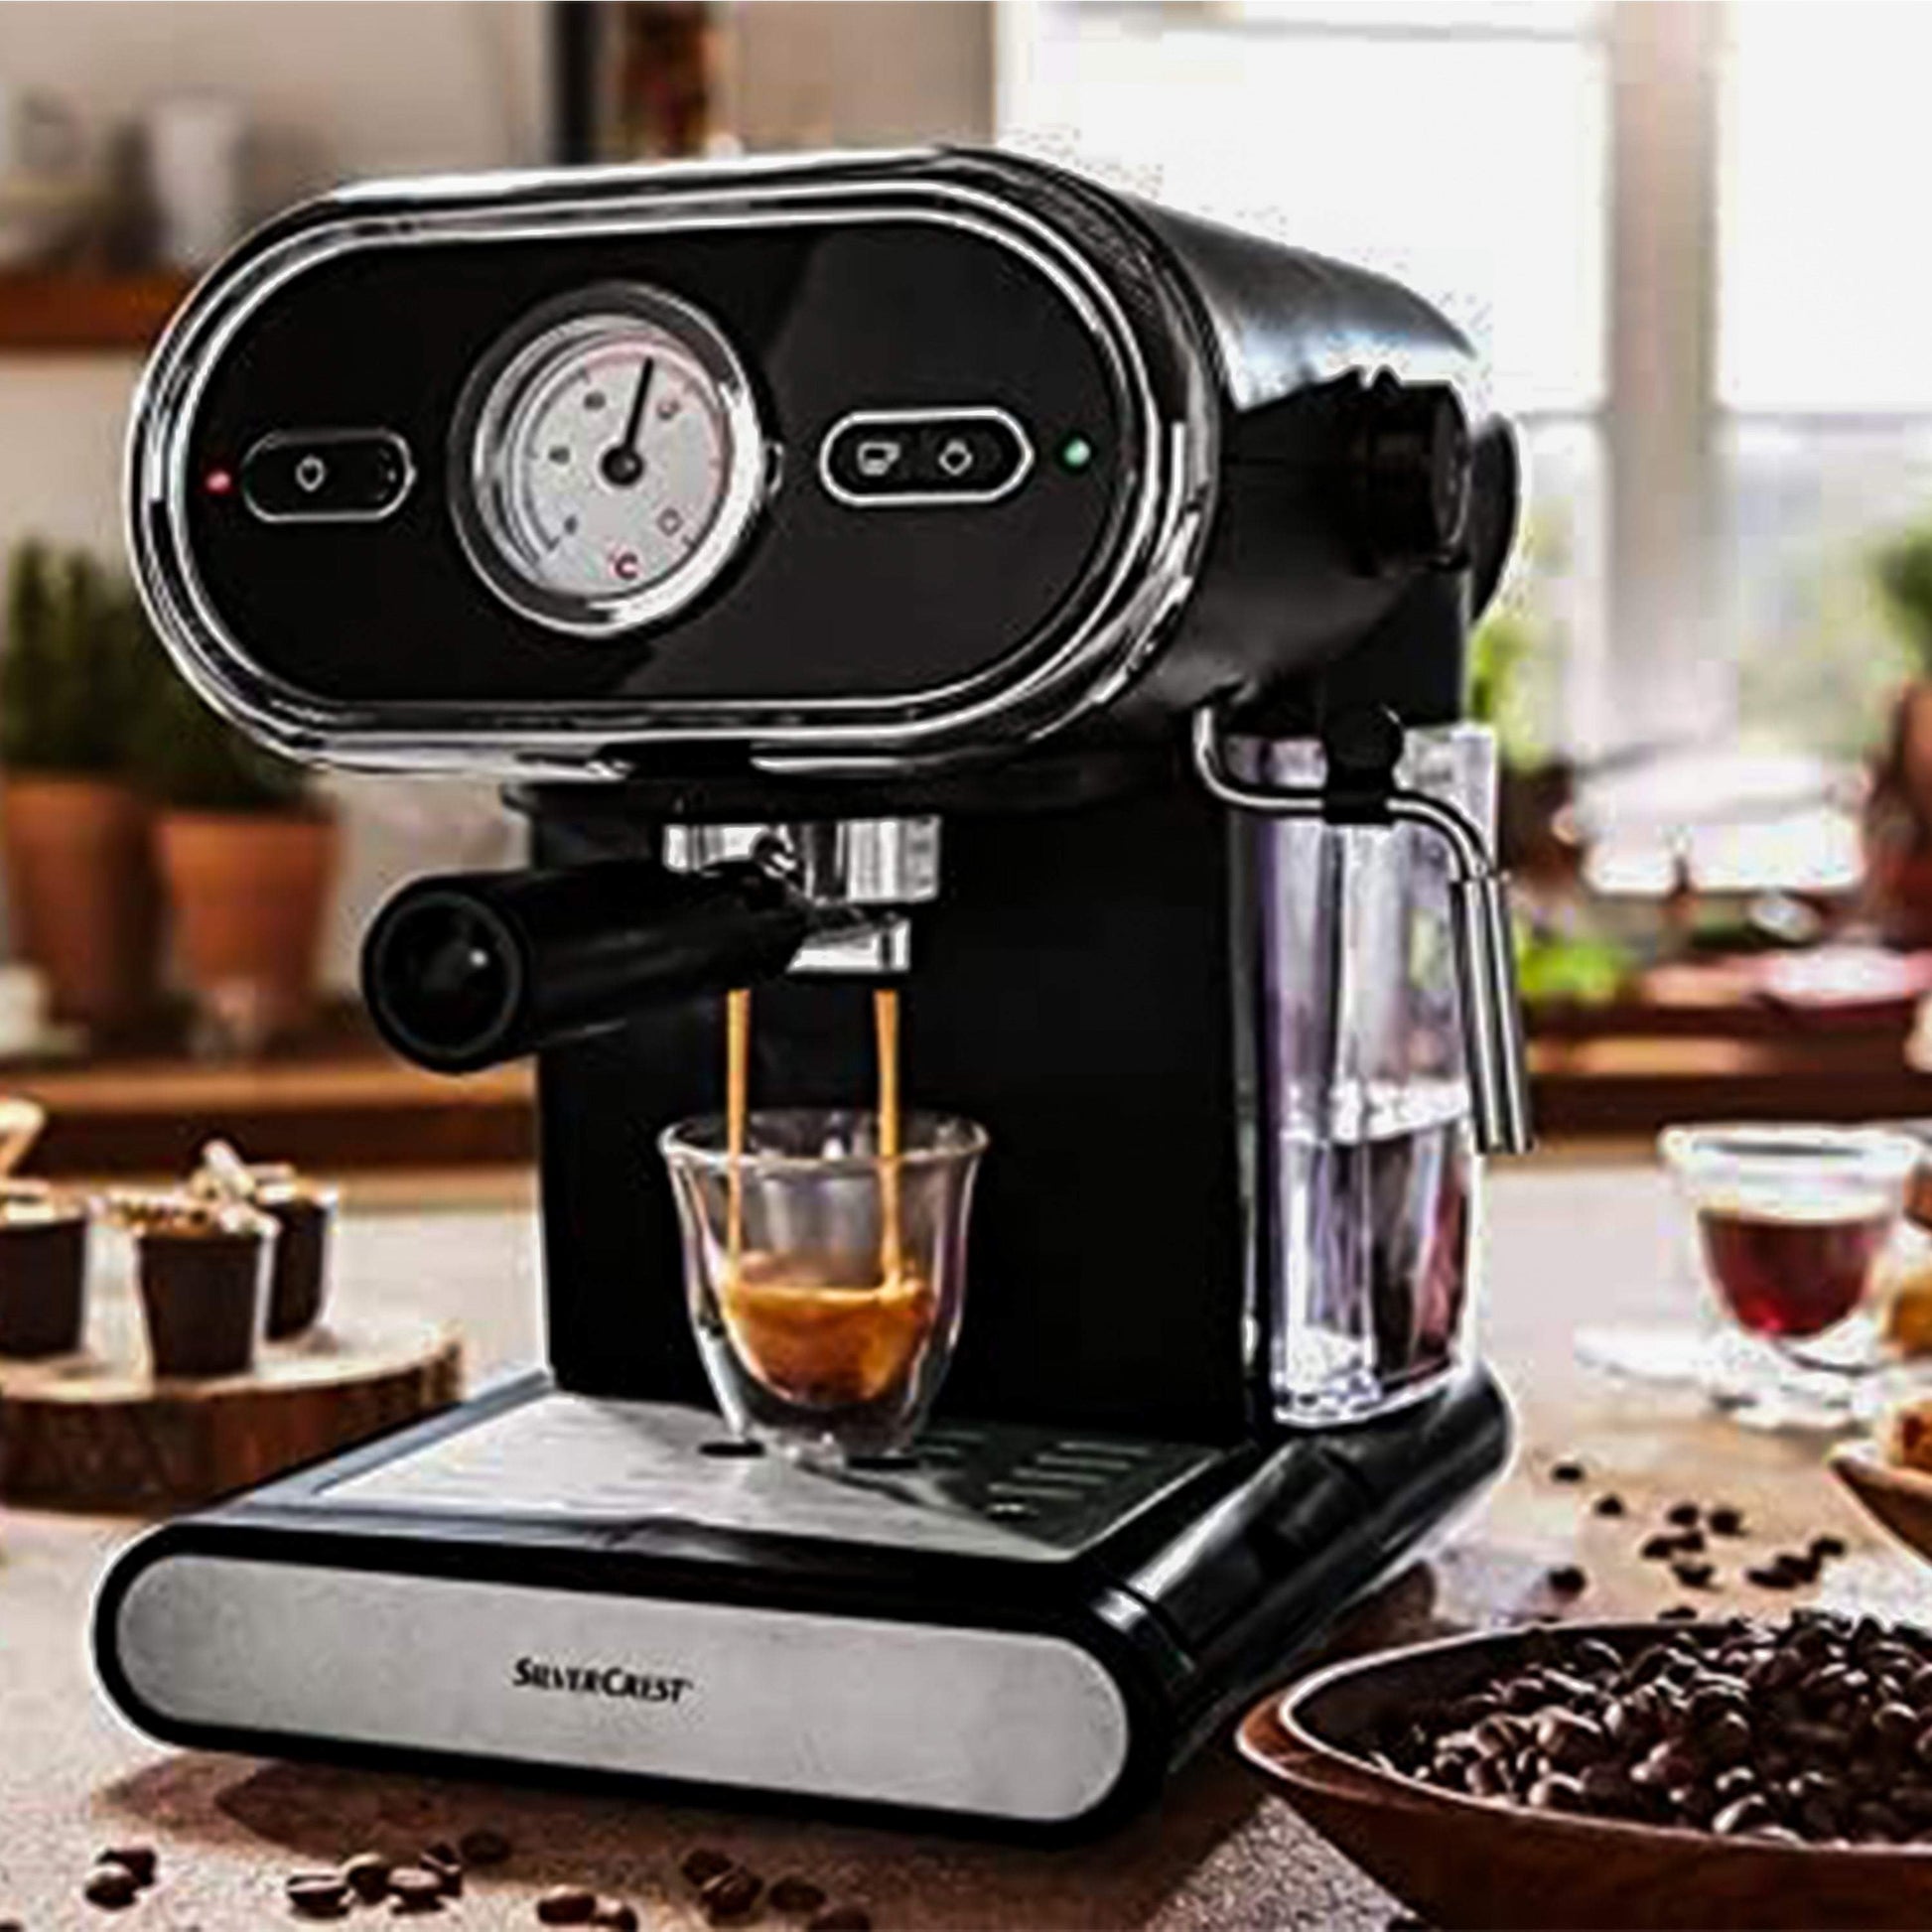 Co Royal 1100 Machine SEM SILVERCREST Brands B3 – Espresso